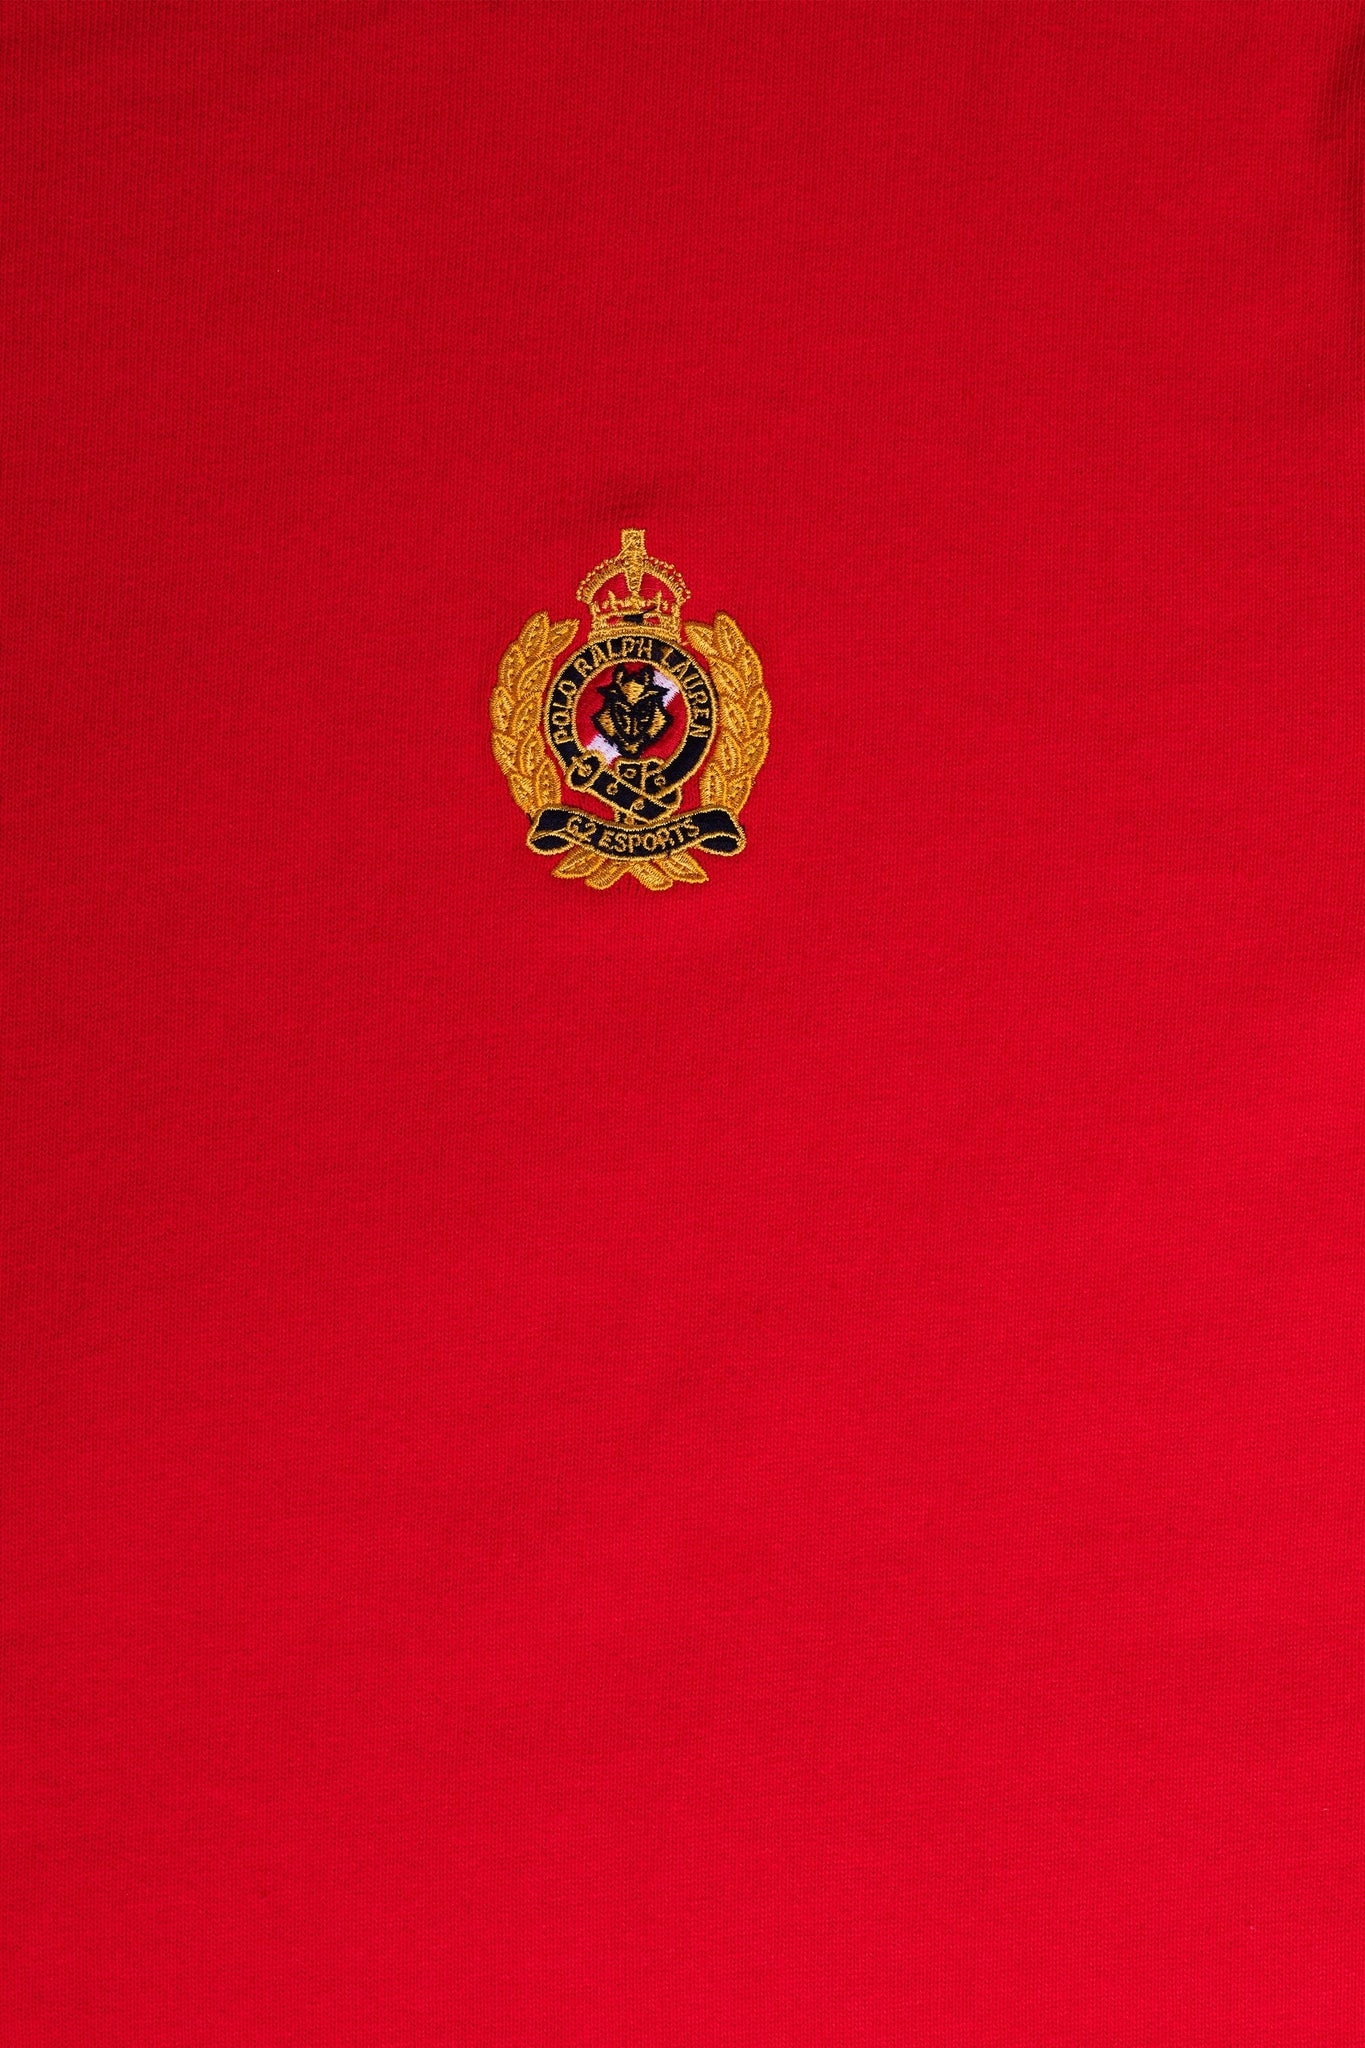 Polo x G2 Esports Unisex - T-shirt - Red